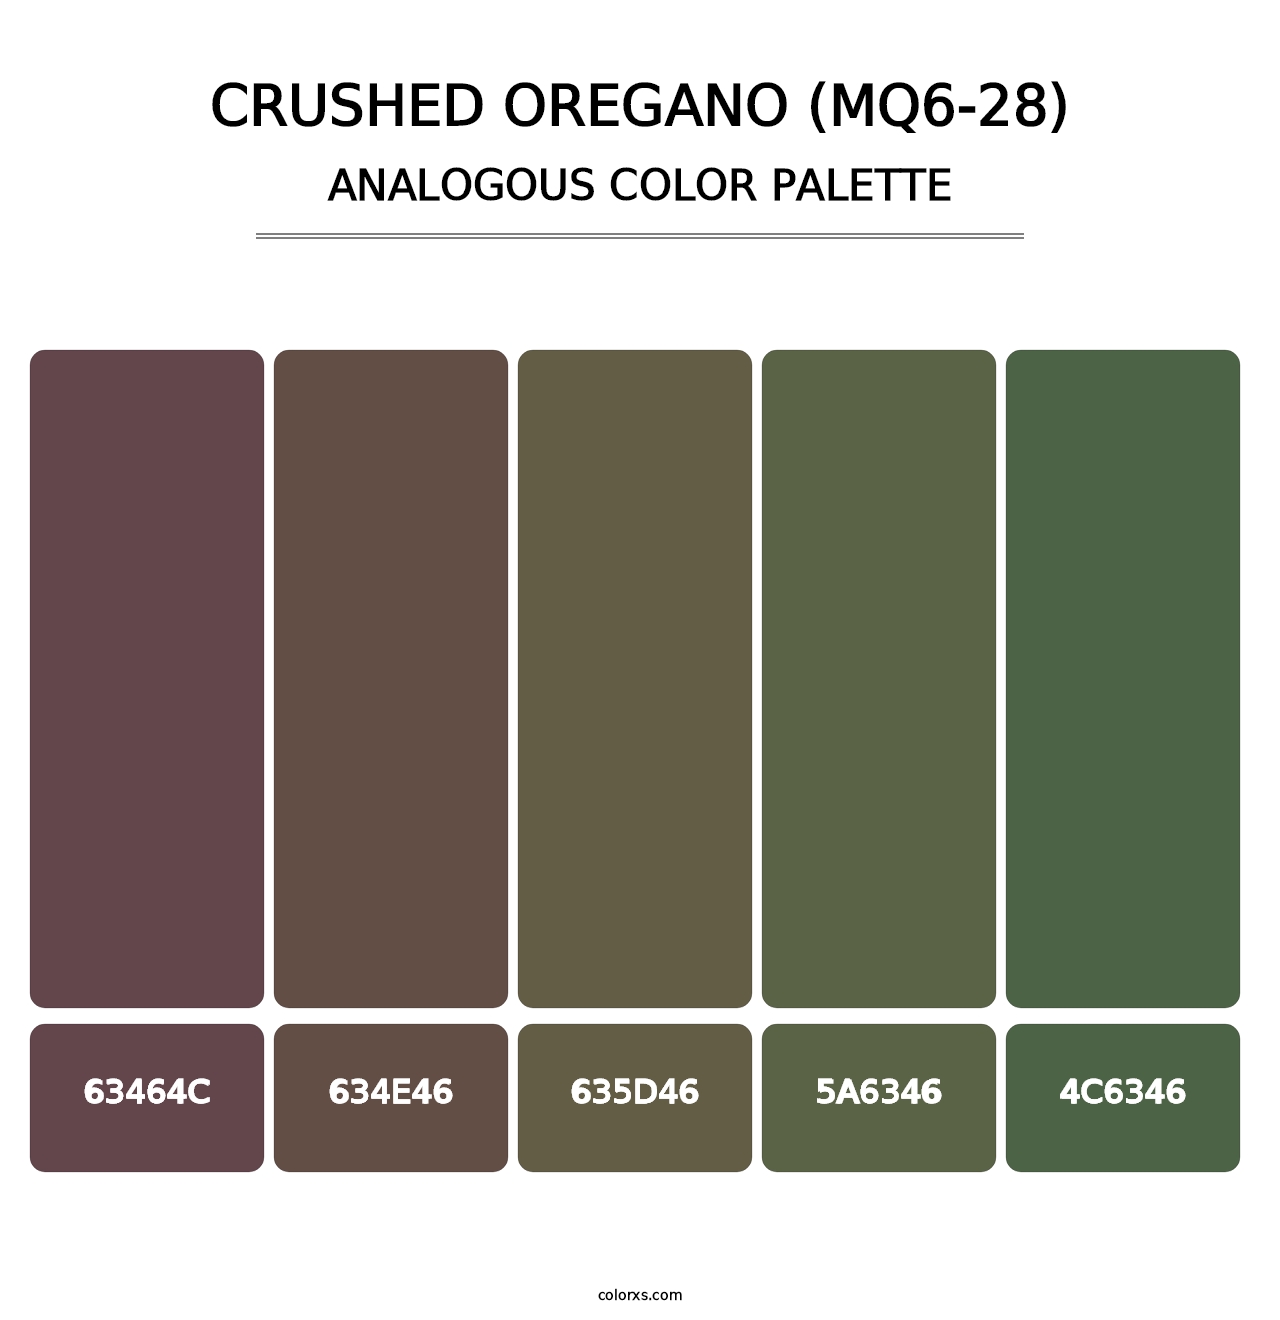 Crushed Oregano (MQ6-28) - Analogous Color Palette